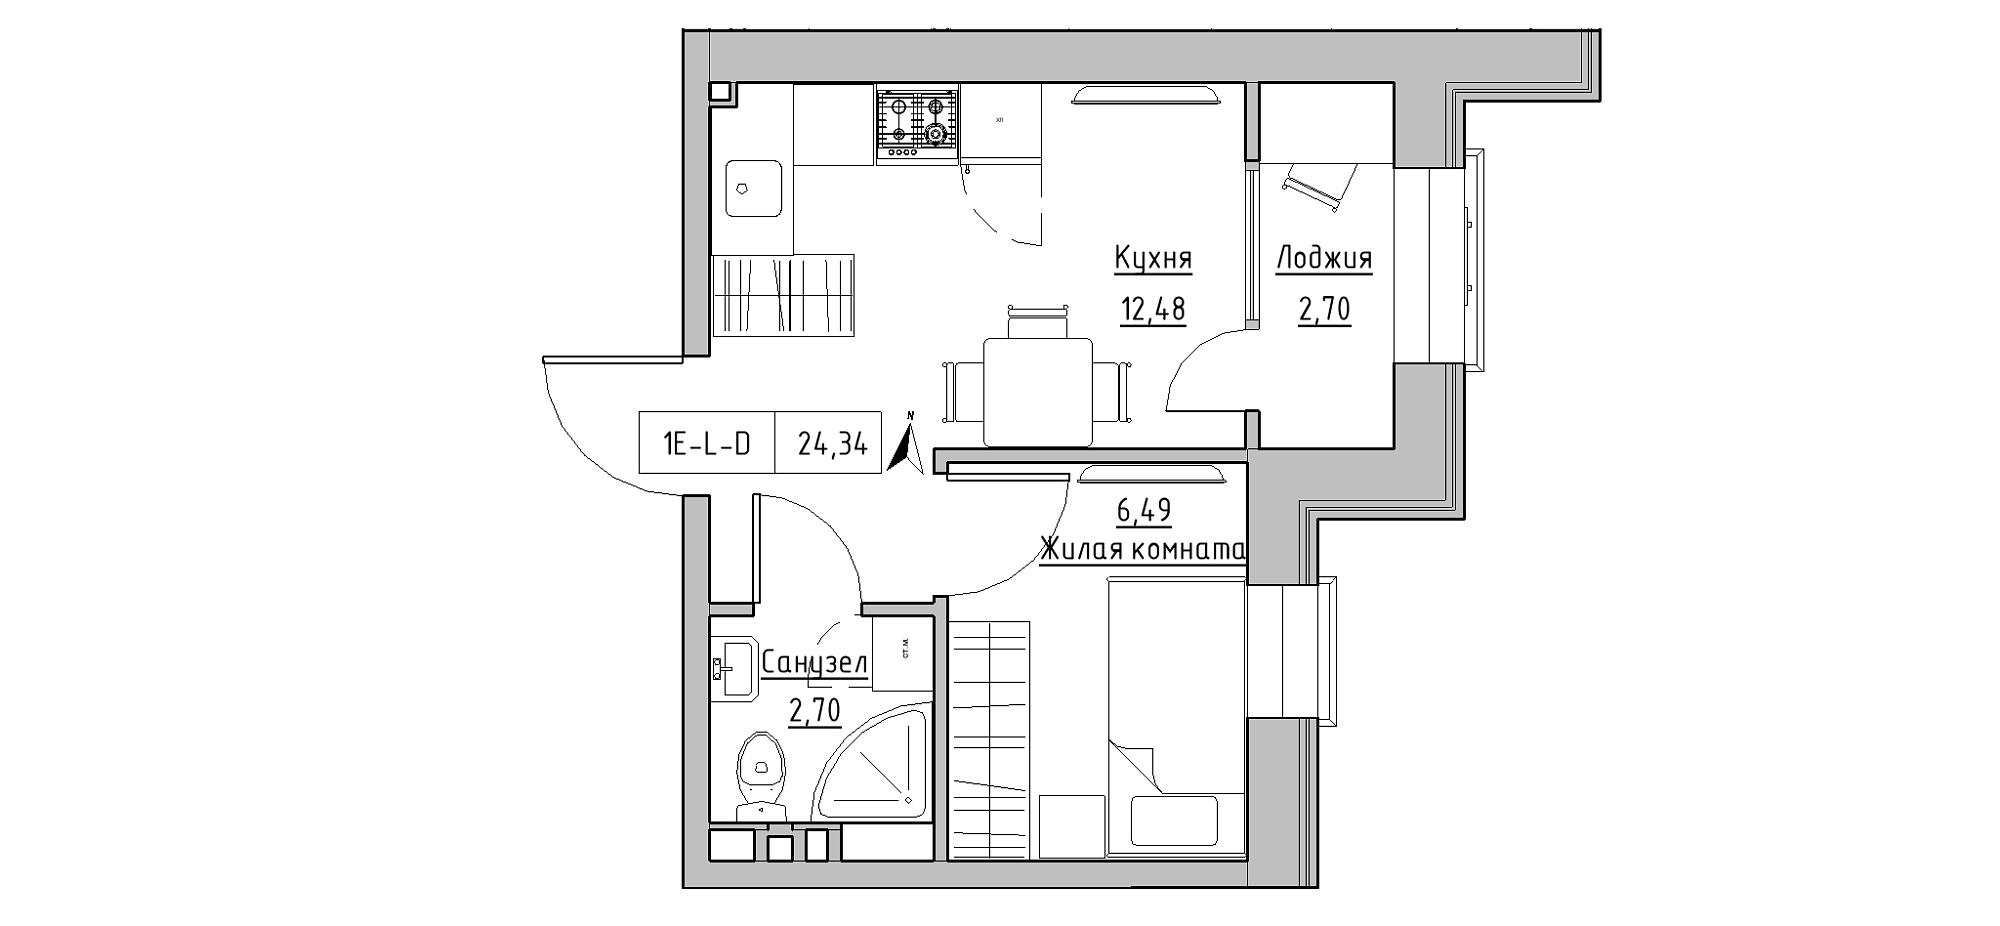 Planning 1-rm flats area 24.34m2, KS-020-03/0015.